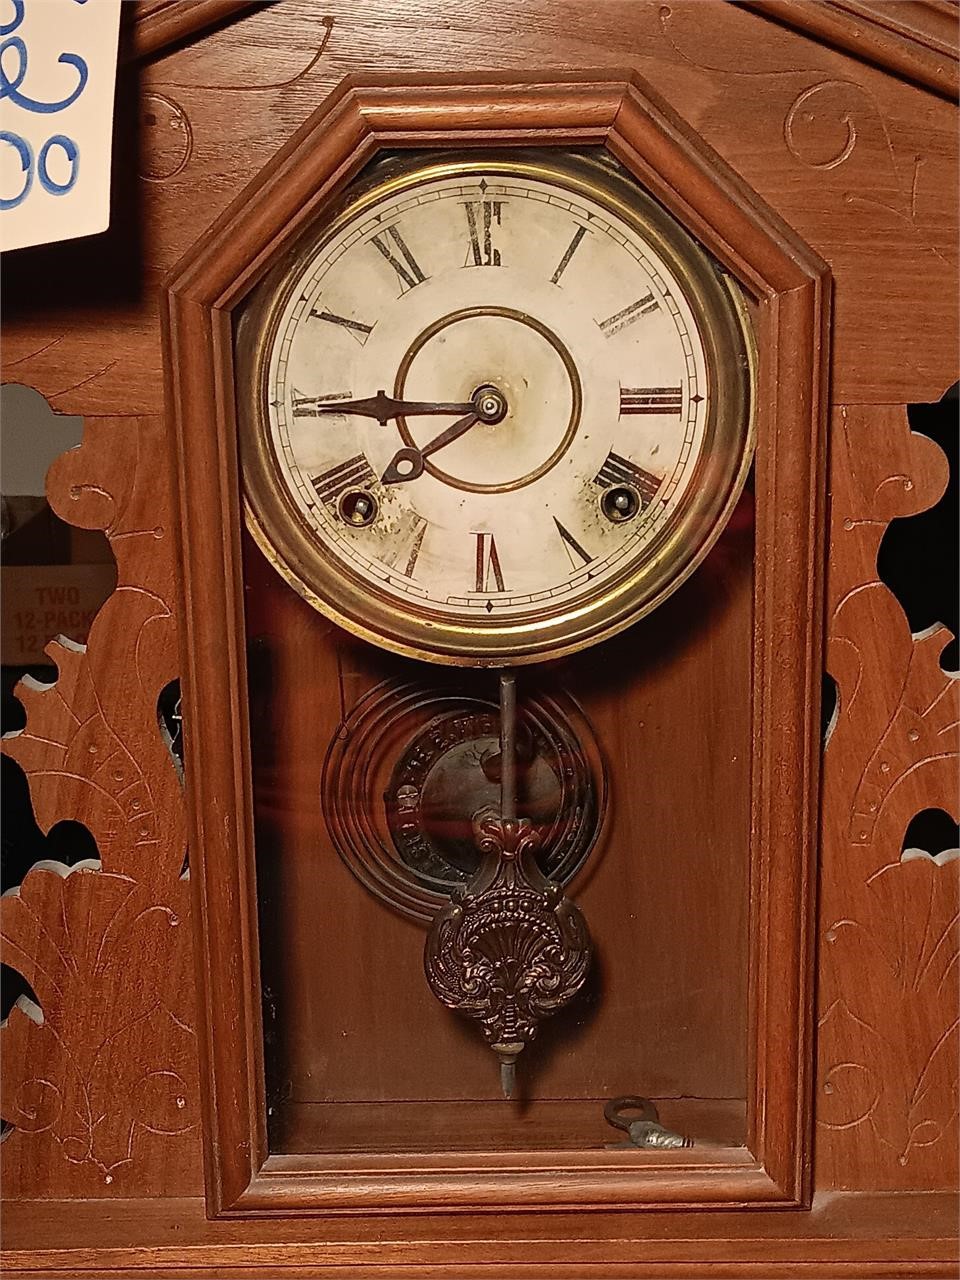 Walnut "Ingraham" Kitchen Clock, With Key. Runs.